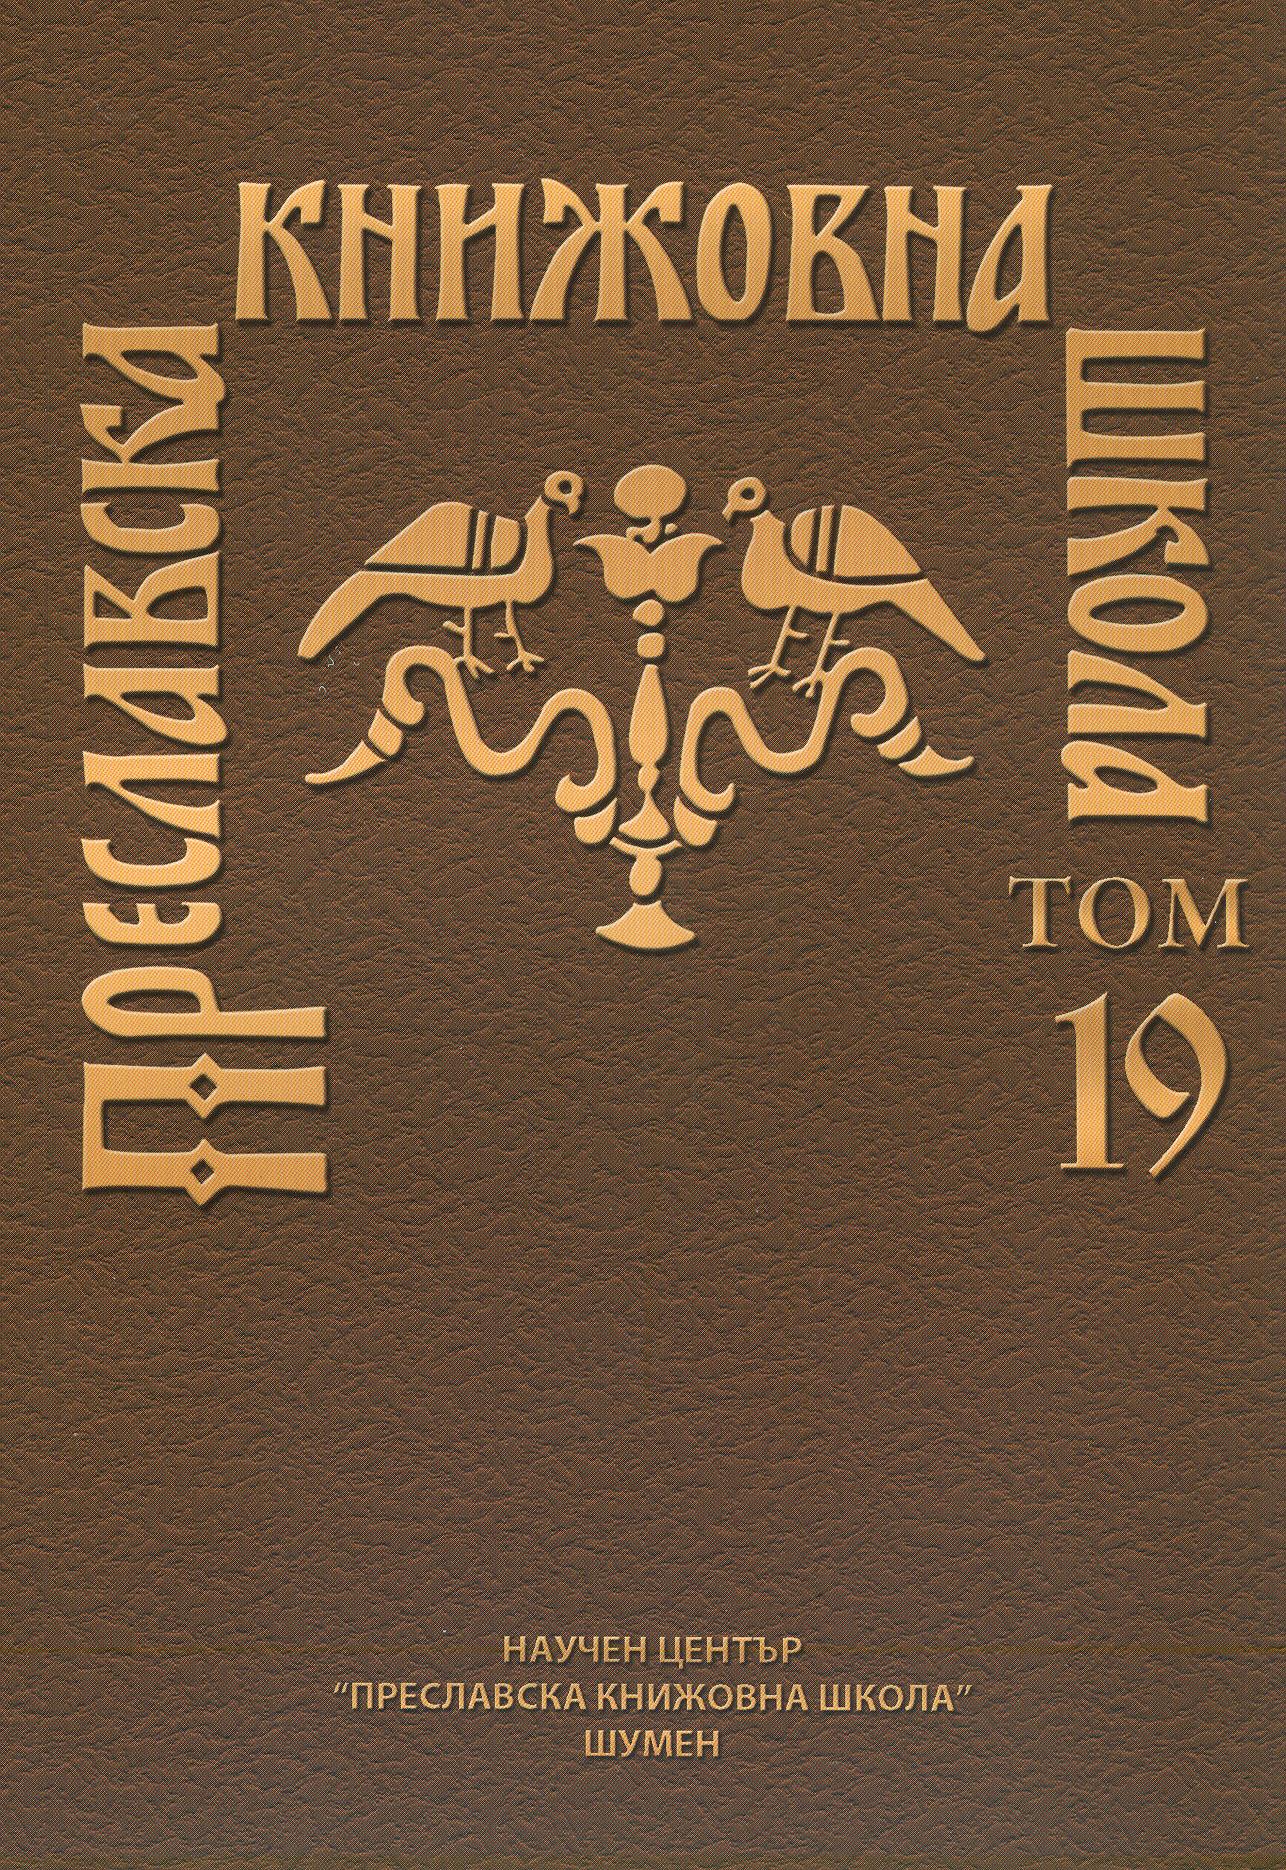 REMINISCENSES OF THE OLD BULGARIAN TRANSLATION OF ATHANASIOS OF ALEKSANDRIAS ANTI-ARIANS WORKS IN PRESBITEROS KOZMAS TREATISE AGAINST THE HERETICS (BOGOMILS) Cover Image